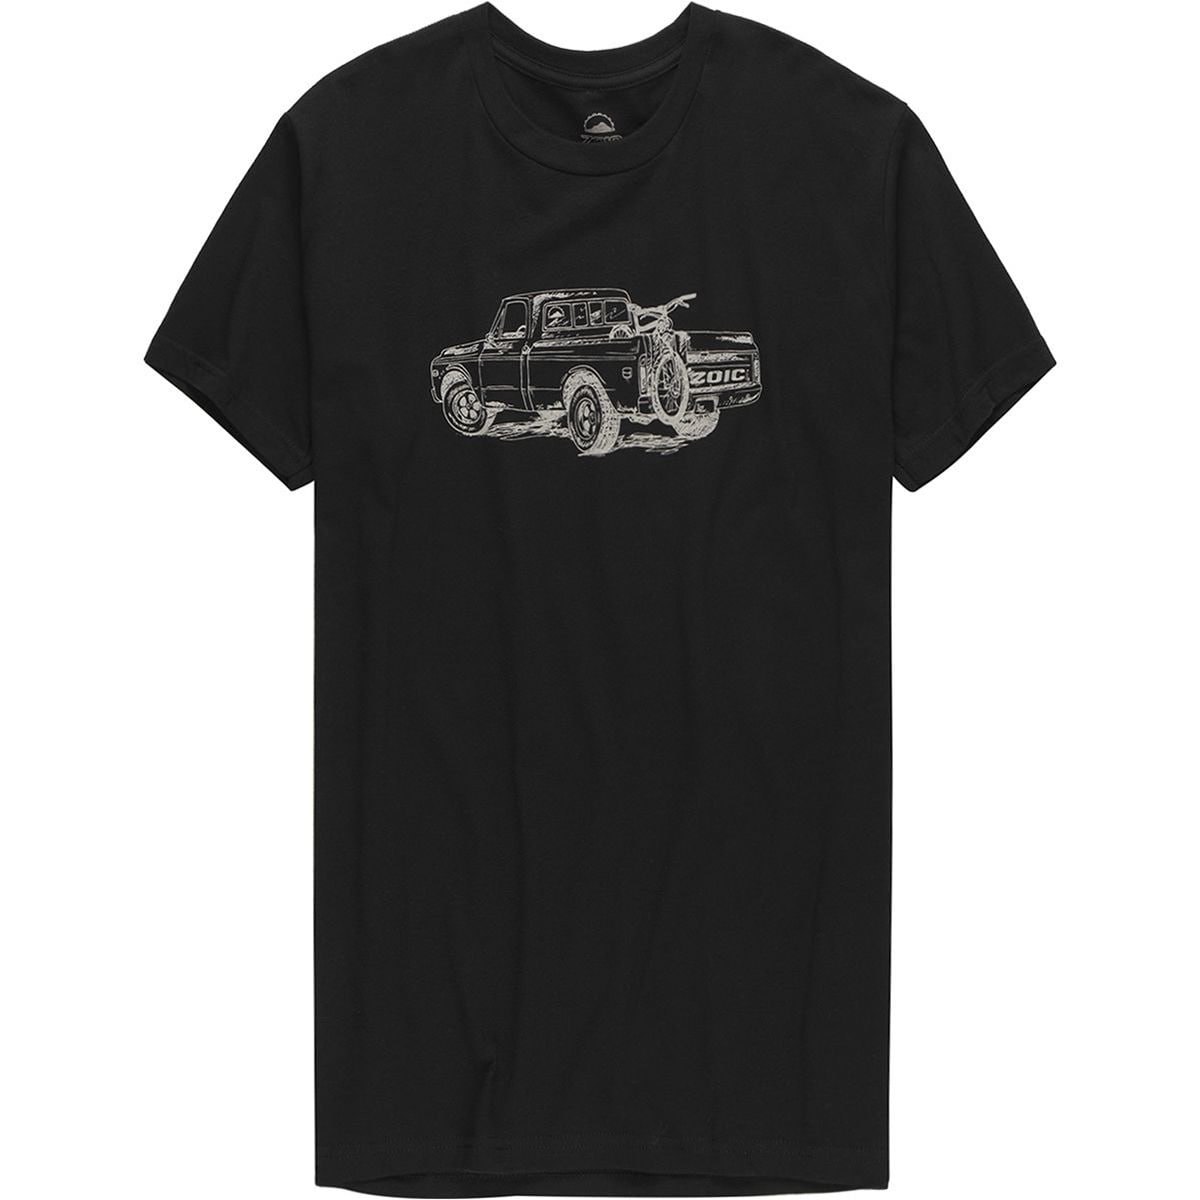 ZOIC Truck Short-Sleeve T-Shirt - Men's